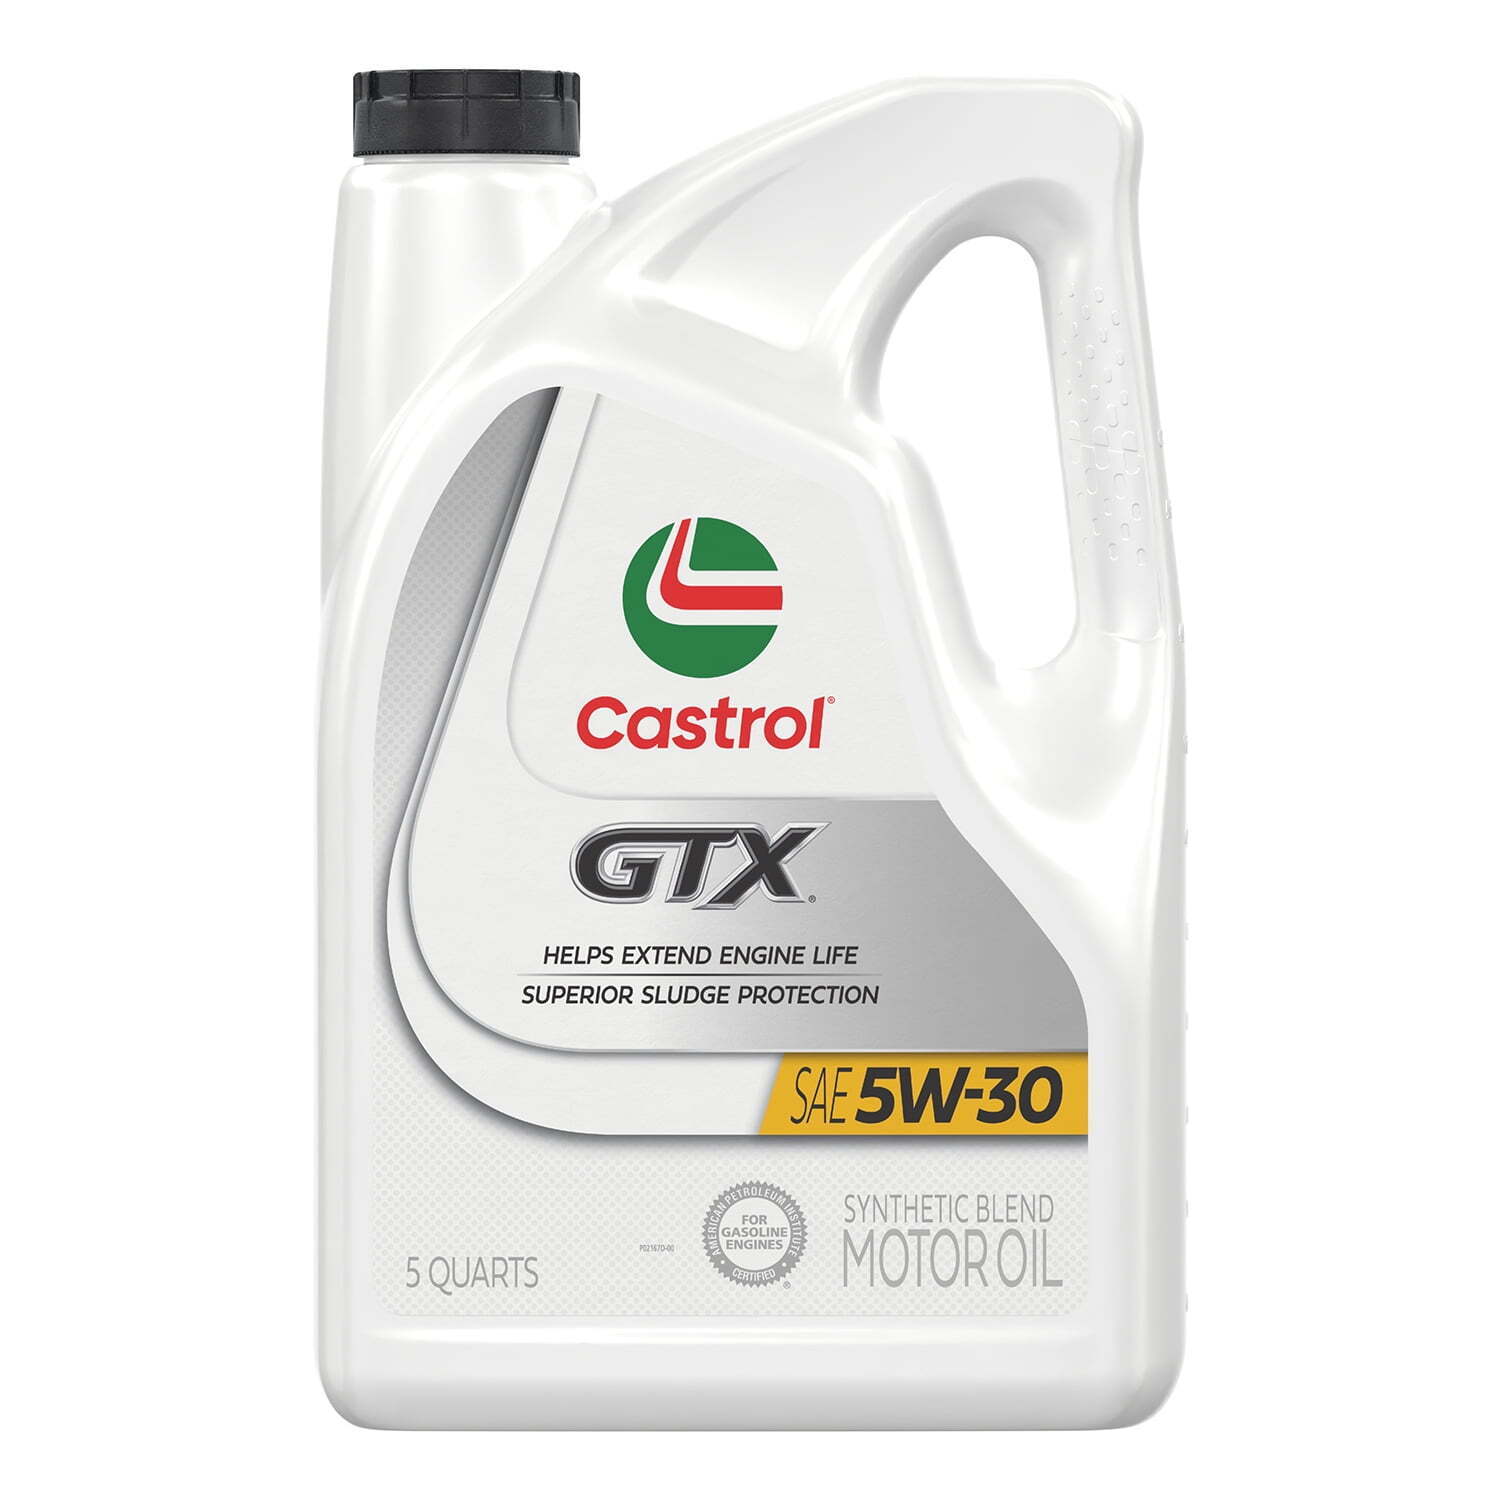 Castrol GTX 5W-30 Synthetic Blend Motor Oil, 5 Quarts